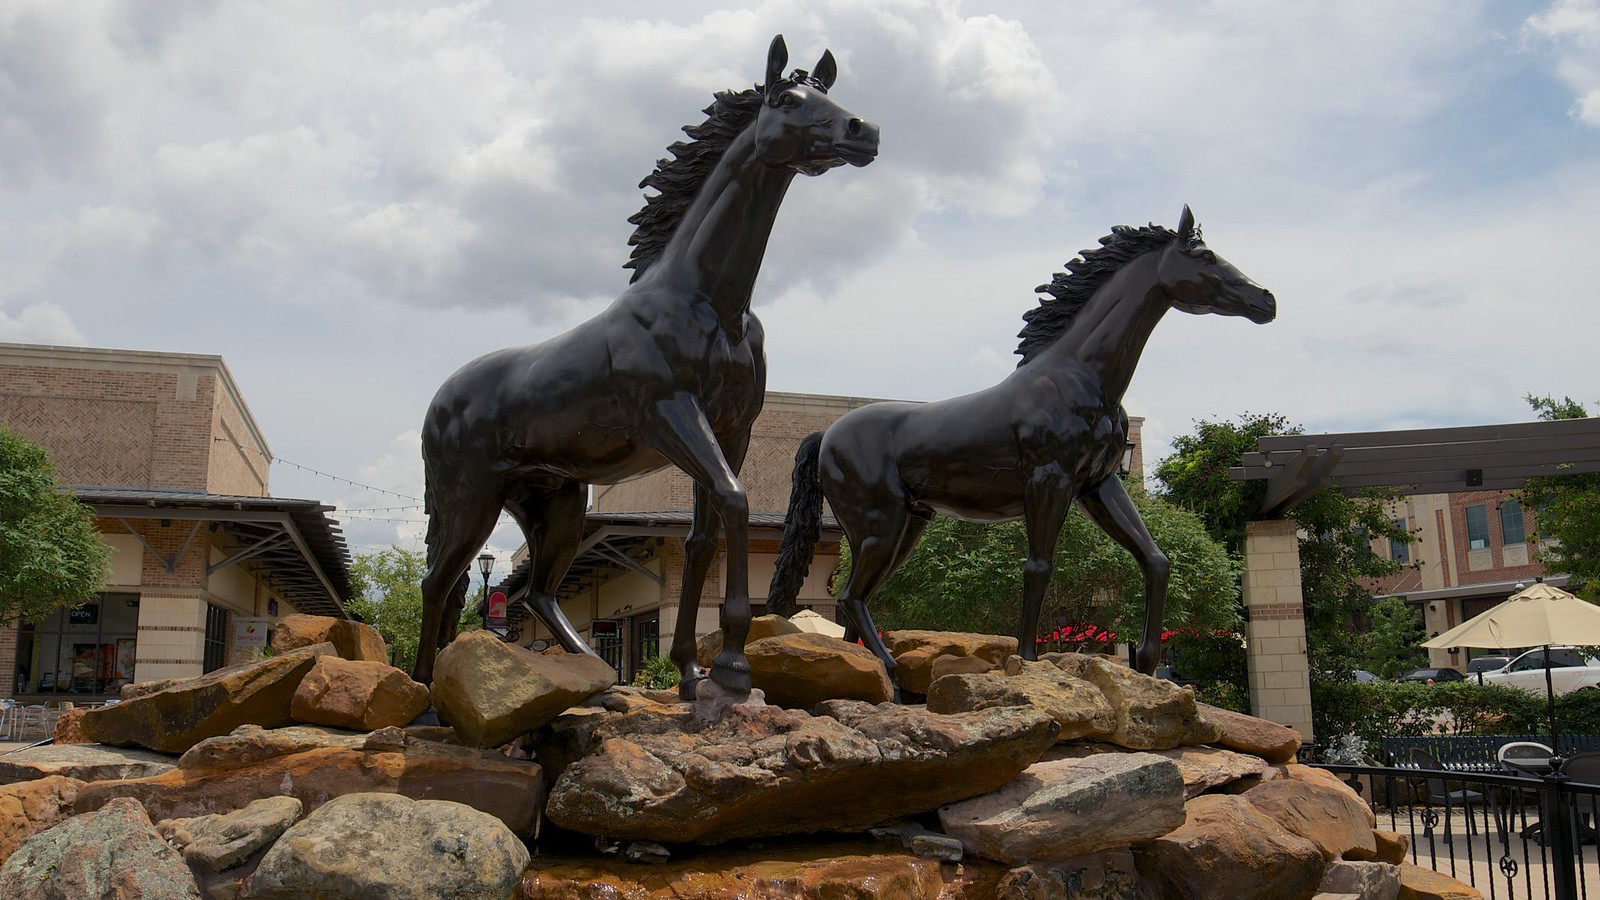 Statue of horses in La Centerra, Fort Bend County Texas